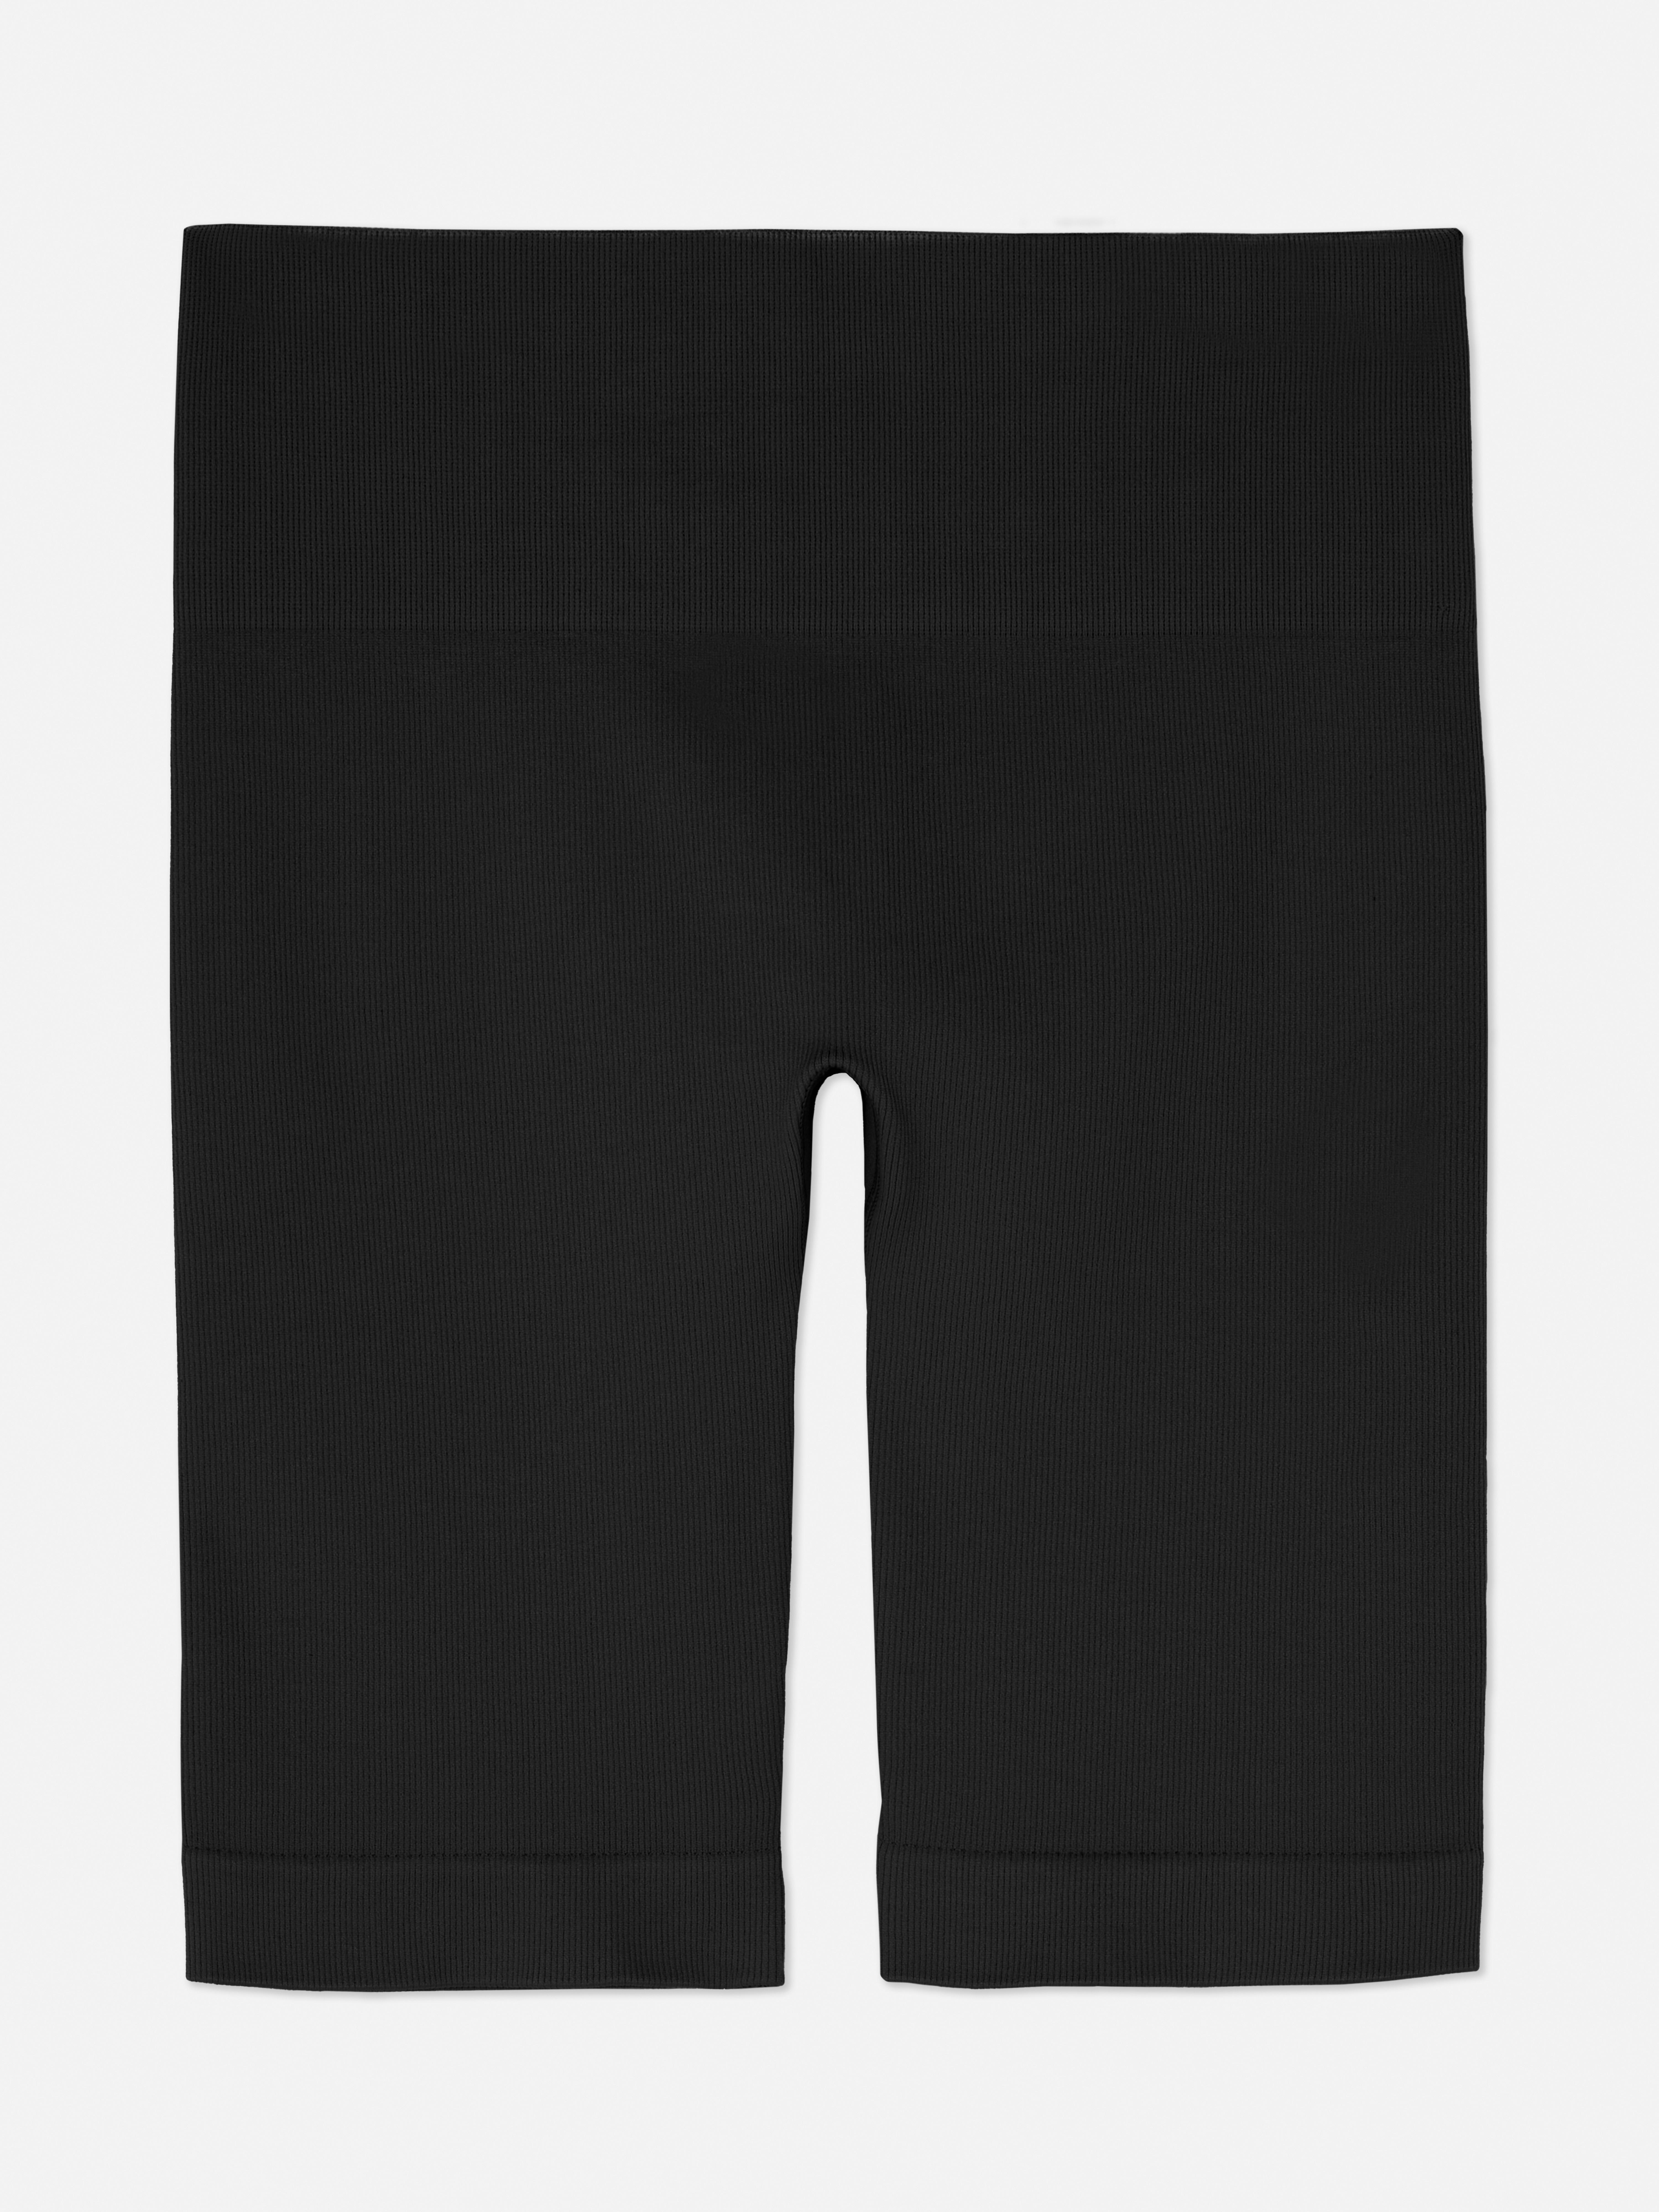 PRIMARK SEAMLESS SET 2XS Black & Grey Zebra Shorts And Crop Top £0.99 -  PicClick UK